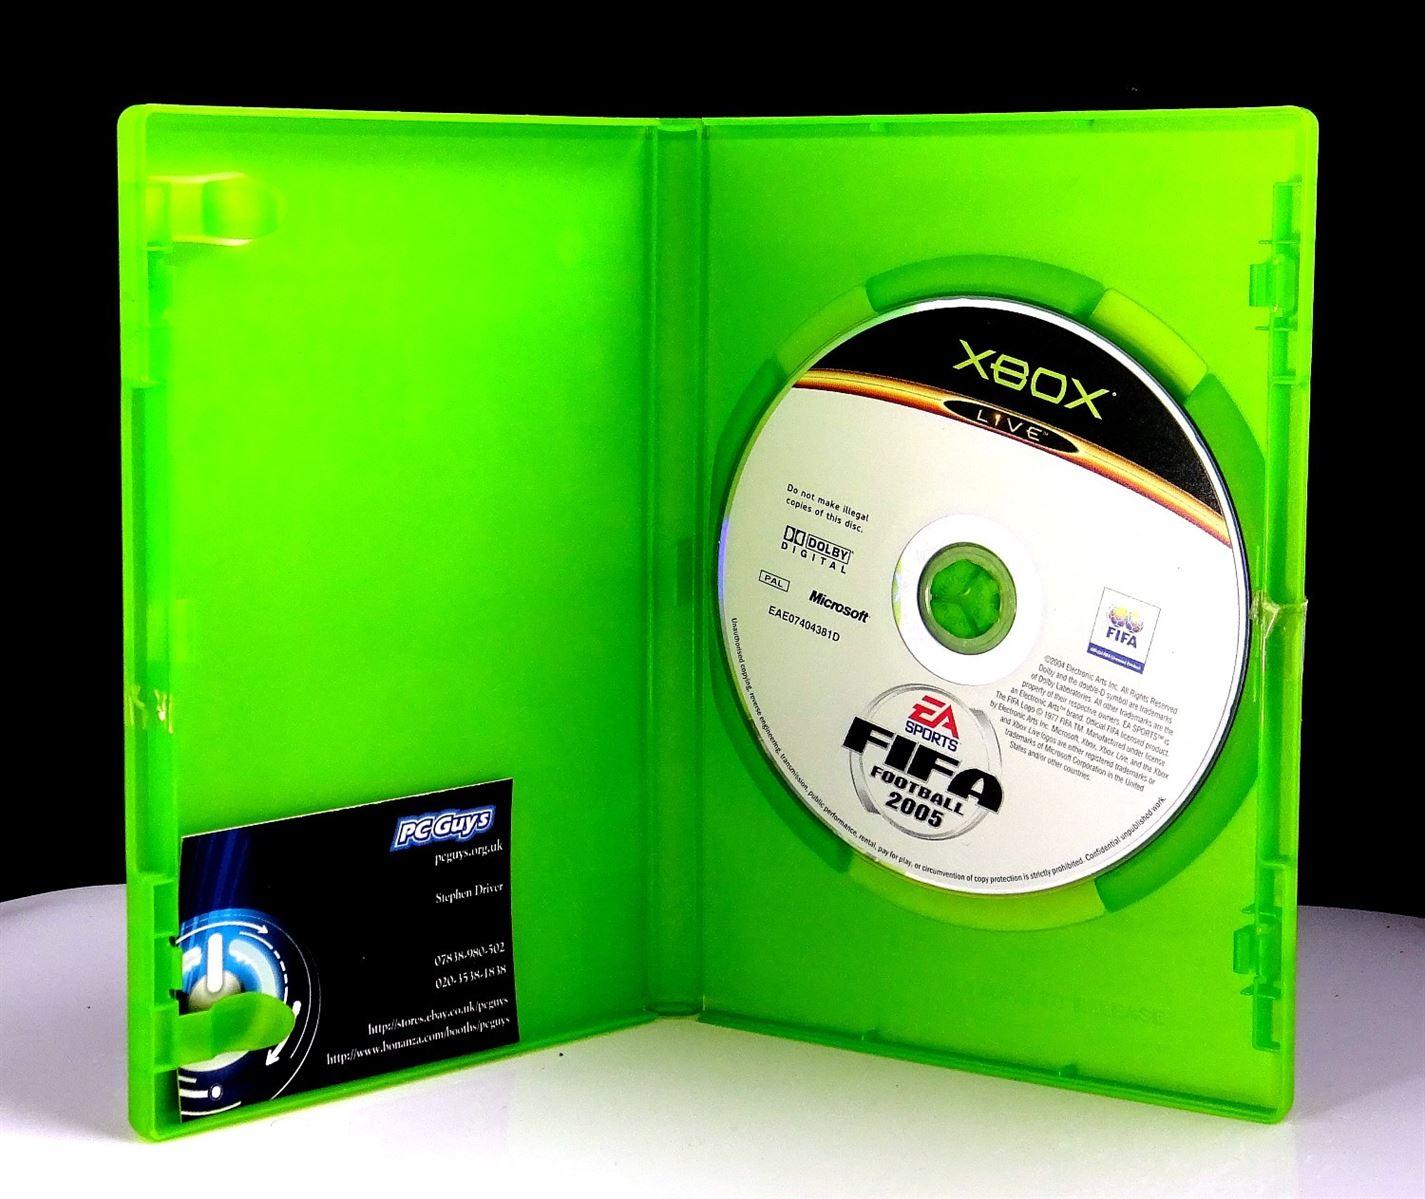 FIFA Football 05 (Xbox) - UK Seller